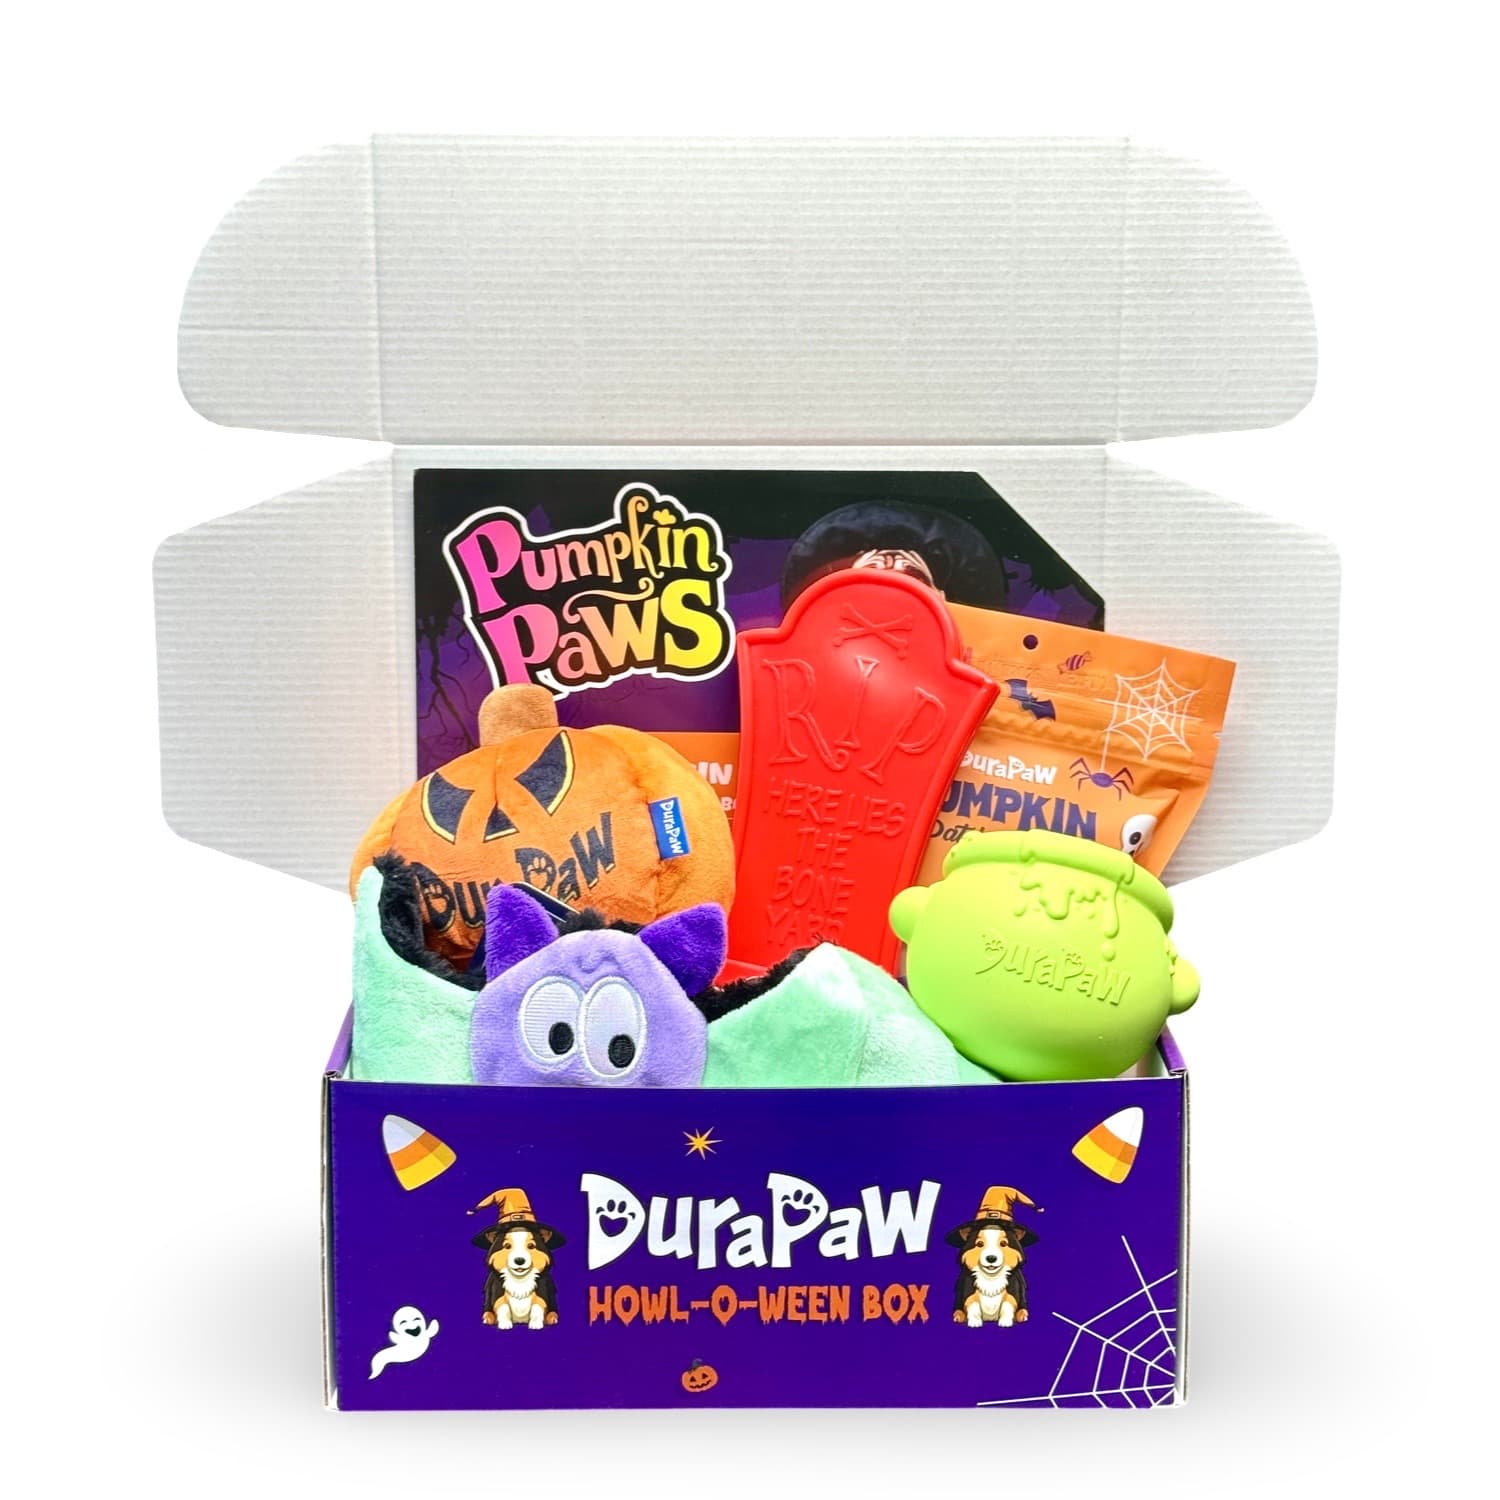 DuraPaw Halloween Themed Dog Toy Gift Box